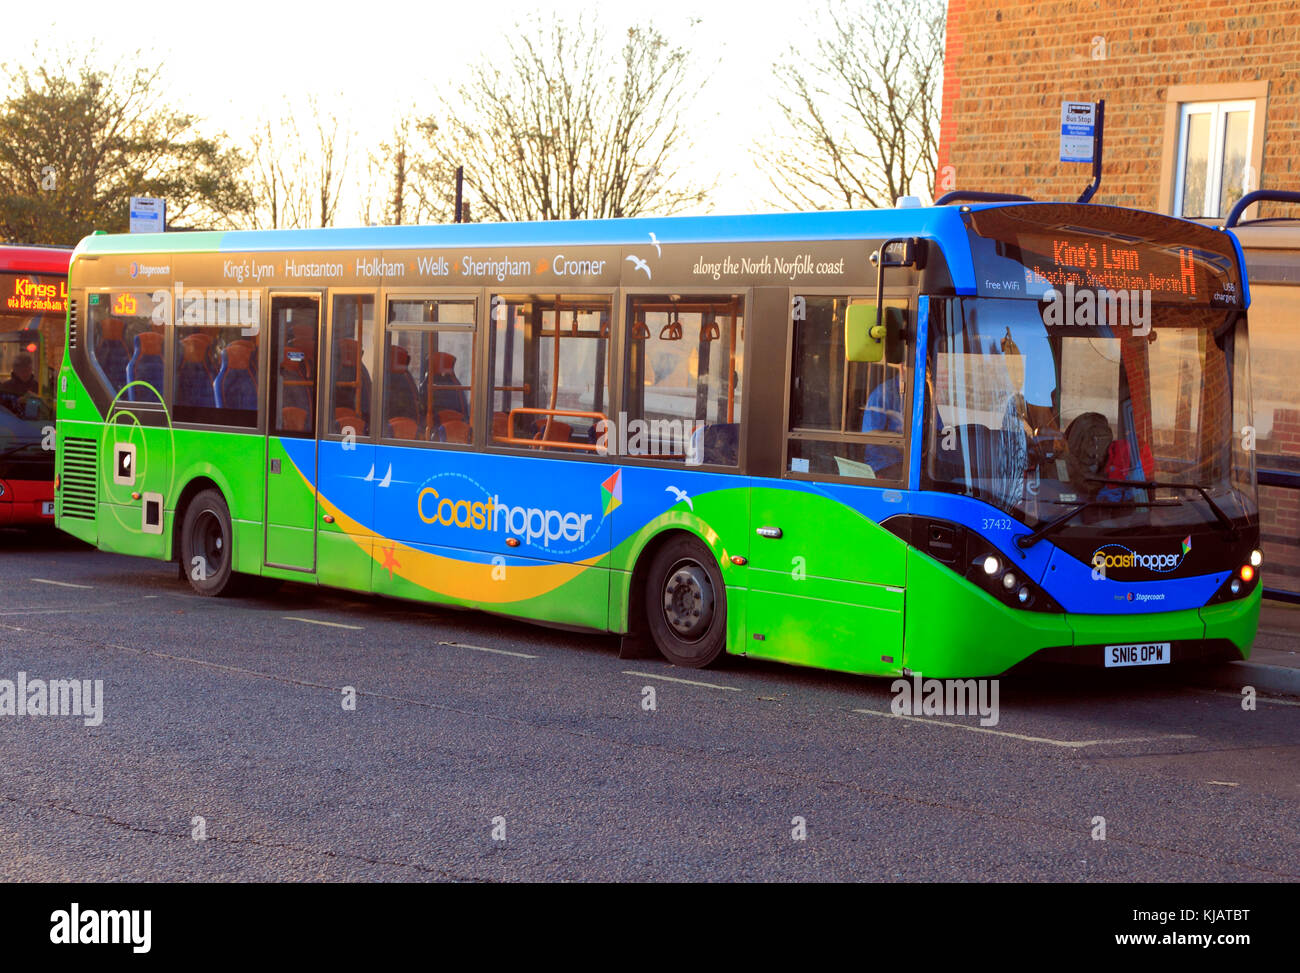 Bus Coasthopper, veicolo, i mezzi di trasporto pubblici, Kings Lynn, Heacham, Snettisham, Dersingham, Hunstanton, Holkham, pozzi, Sheringham, North Norfolk Foto Stock